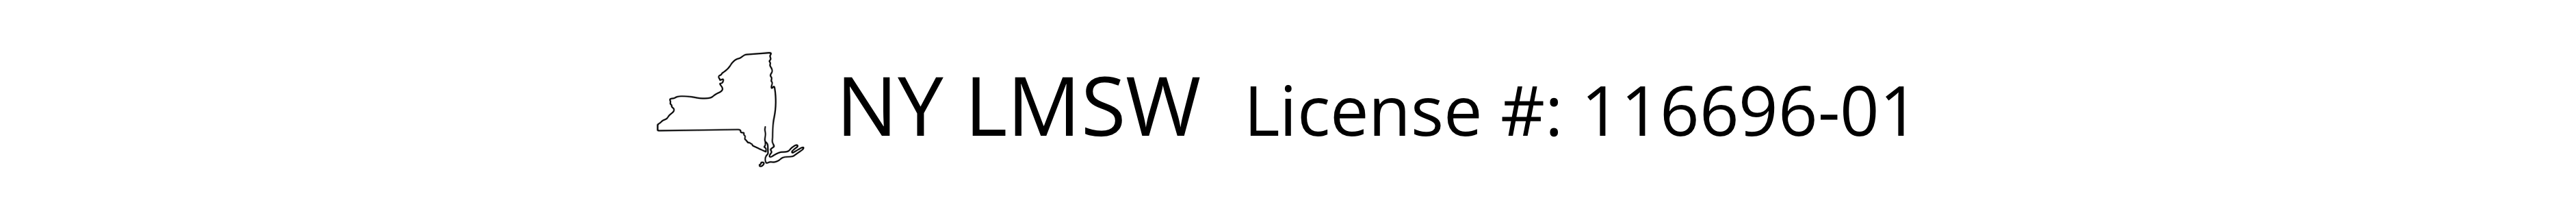 License R